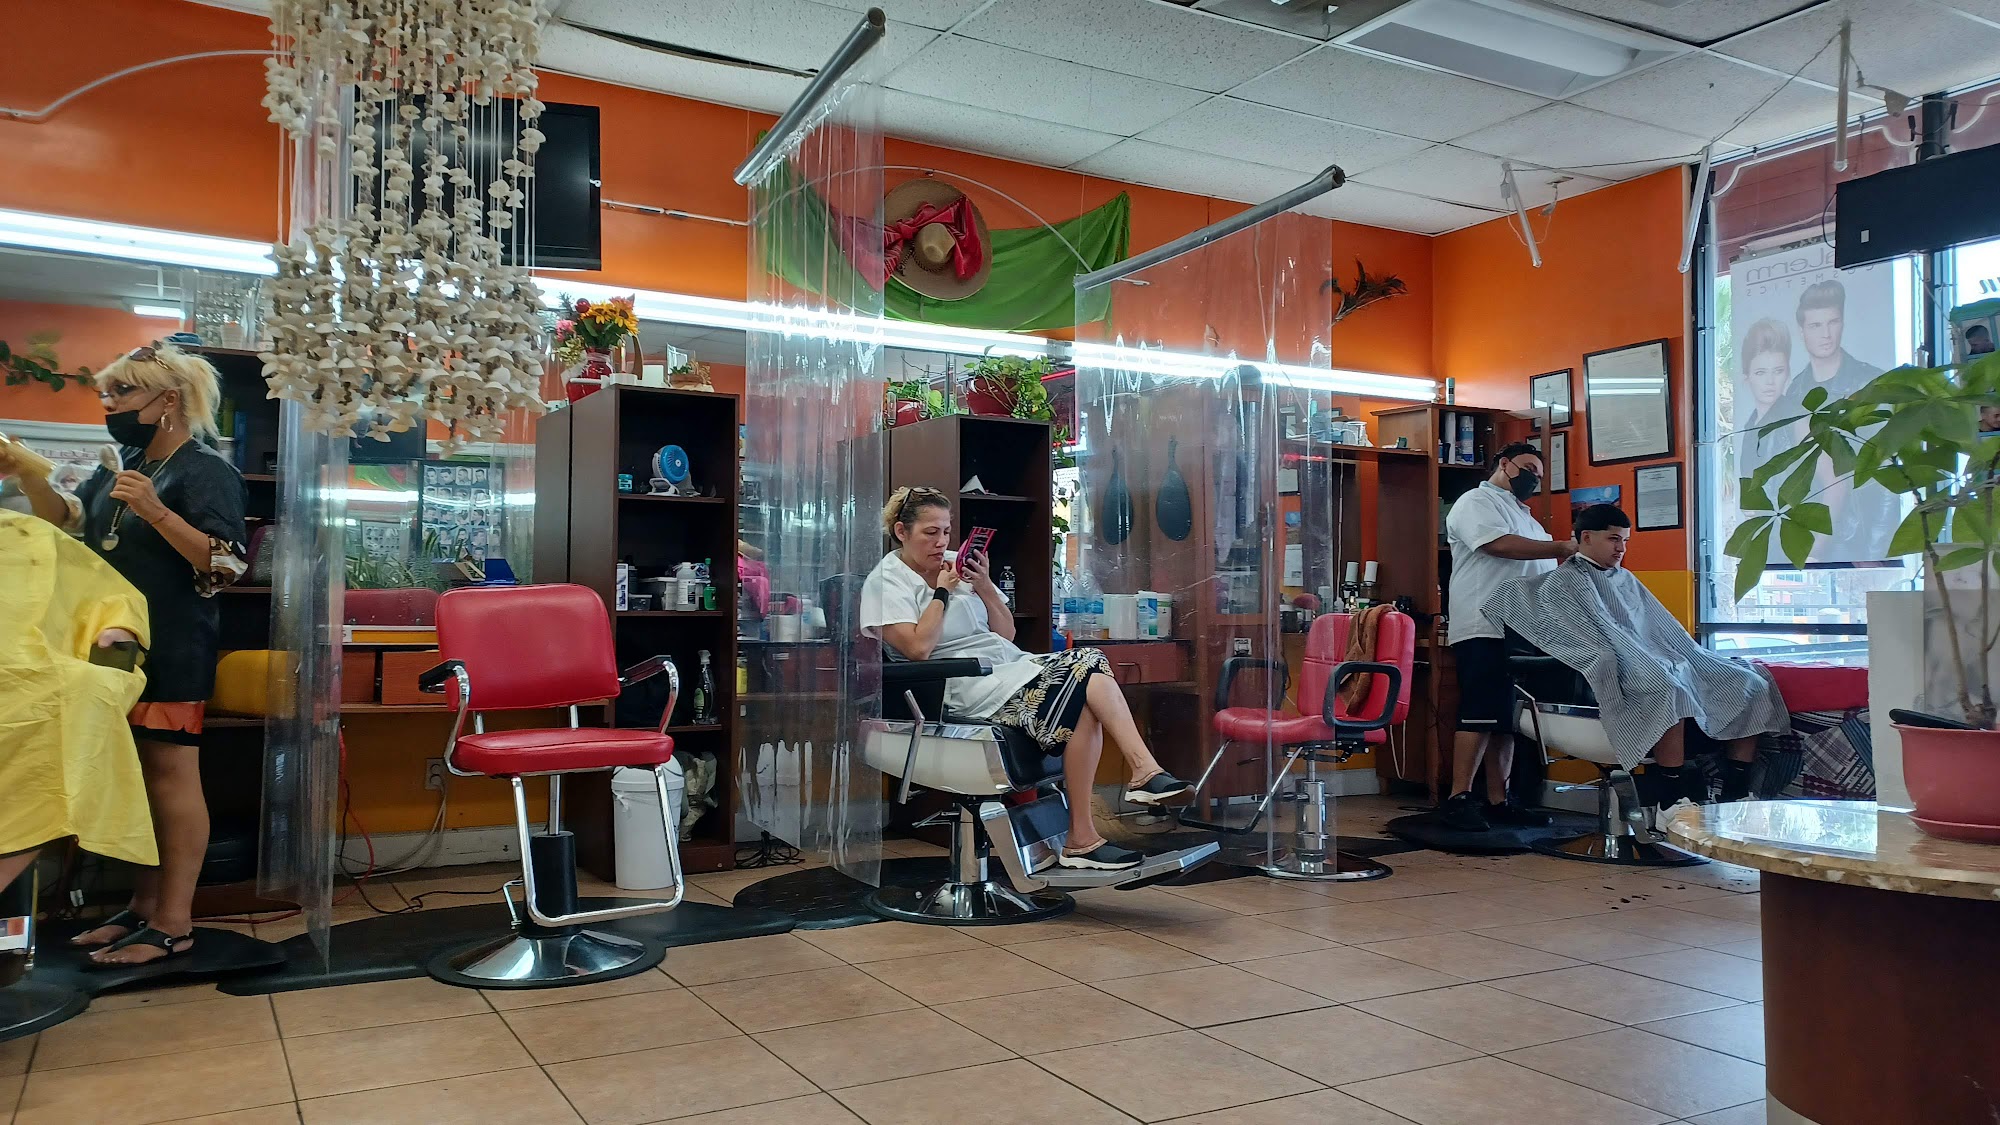 The Jordan Barber Shop